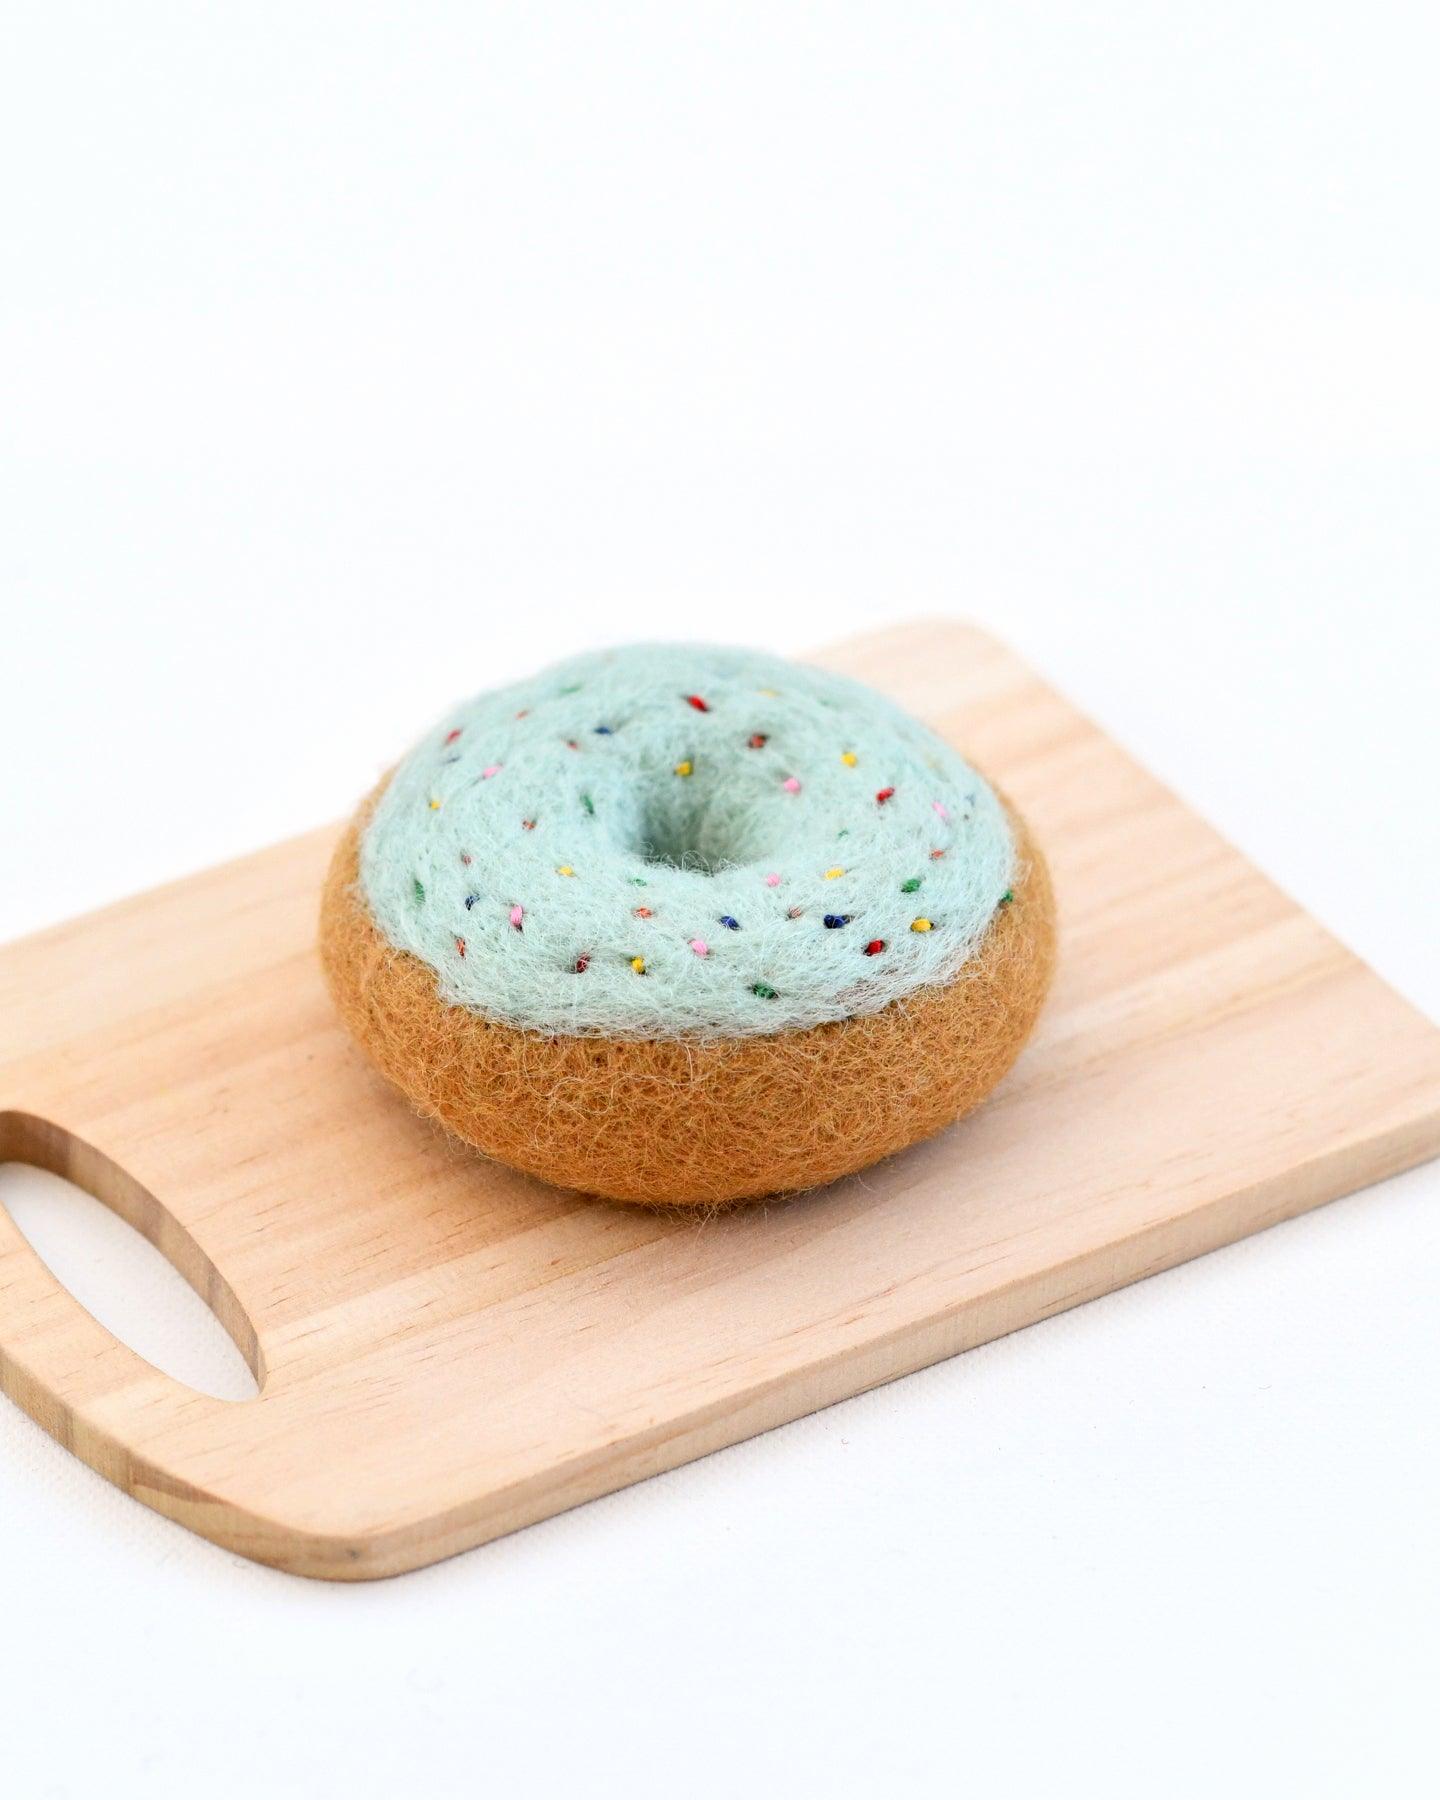 Felt Doughnut (Donut) with Blue Vanilla Frosting and Rainbow Sprinkles - Tara Treasures